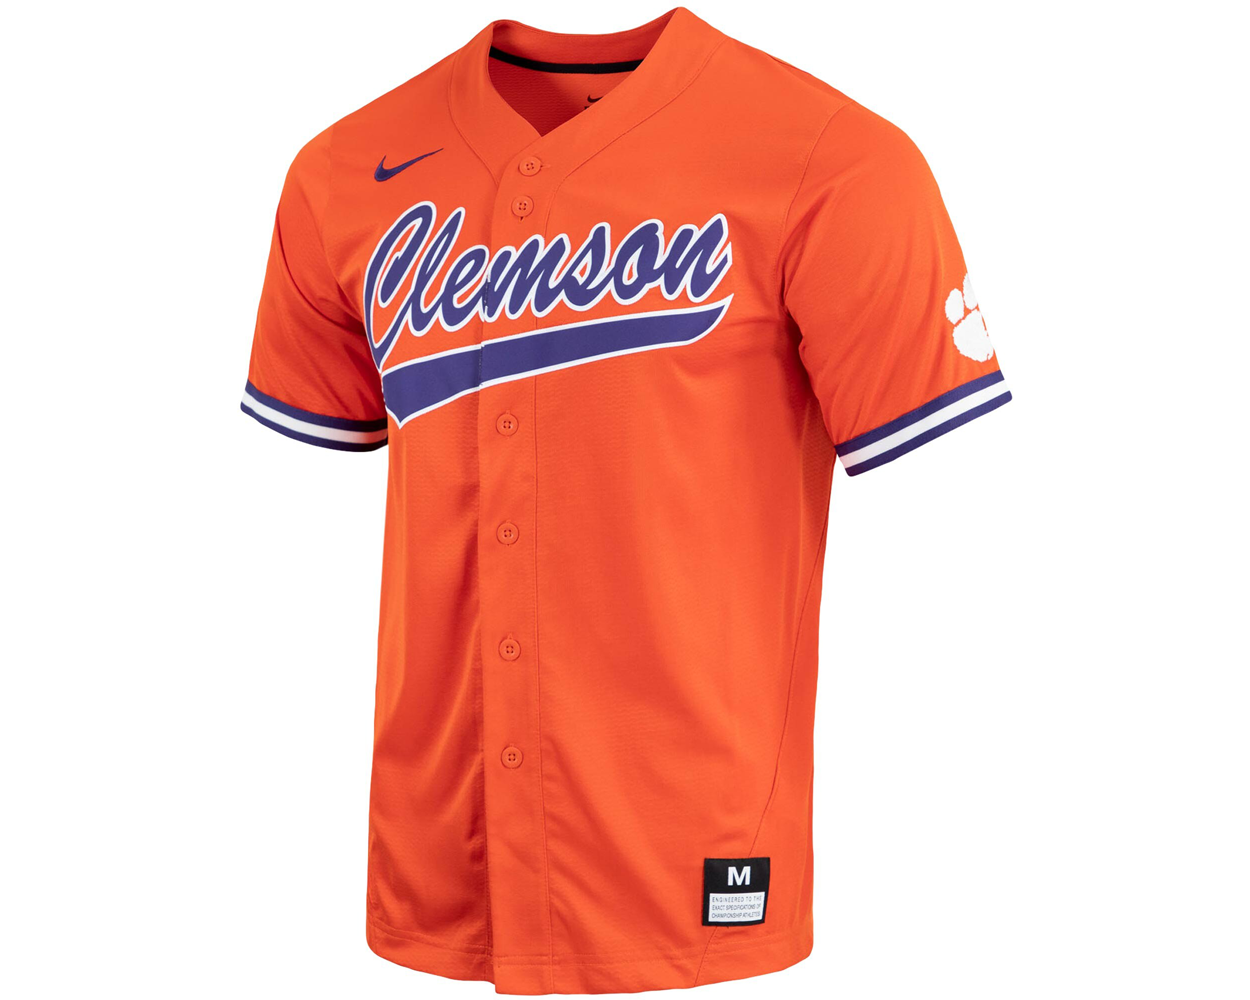 Clemson Tigers baseball MVP jersey